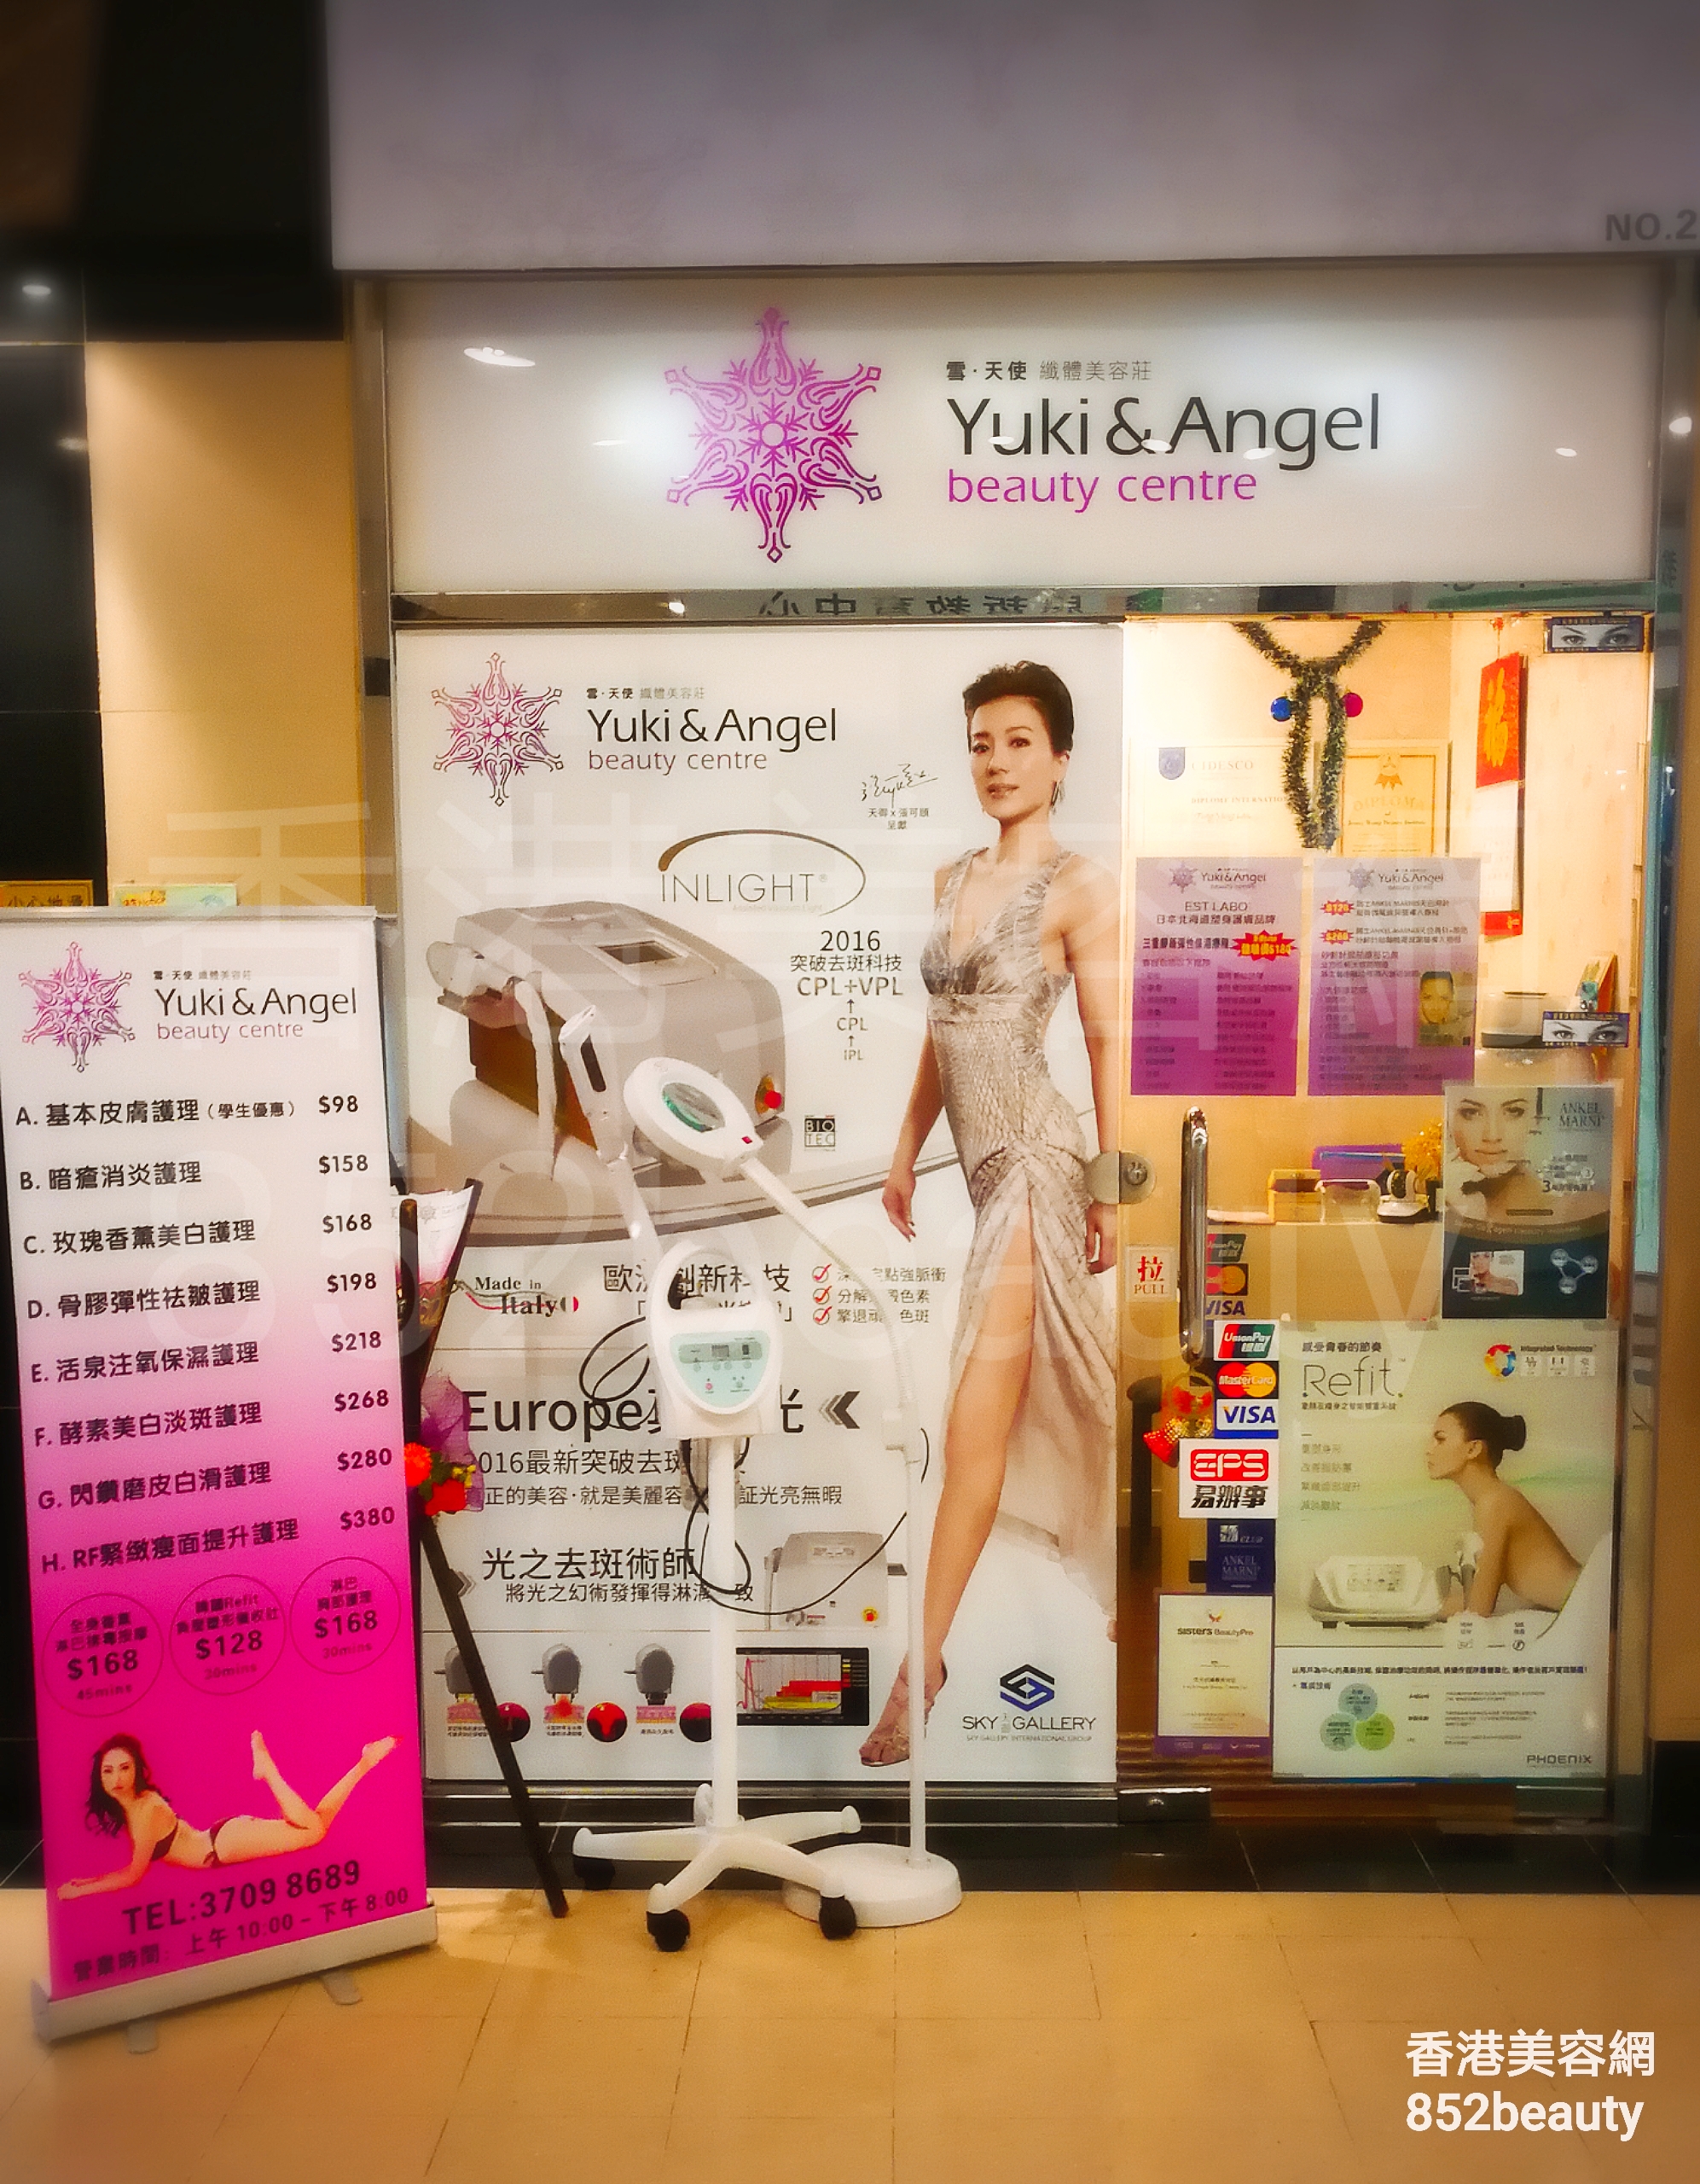 Hair Removal: Yuki & Angel beauty centre